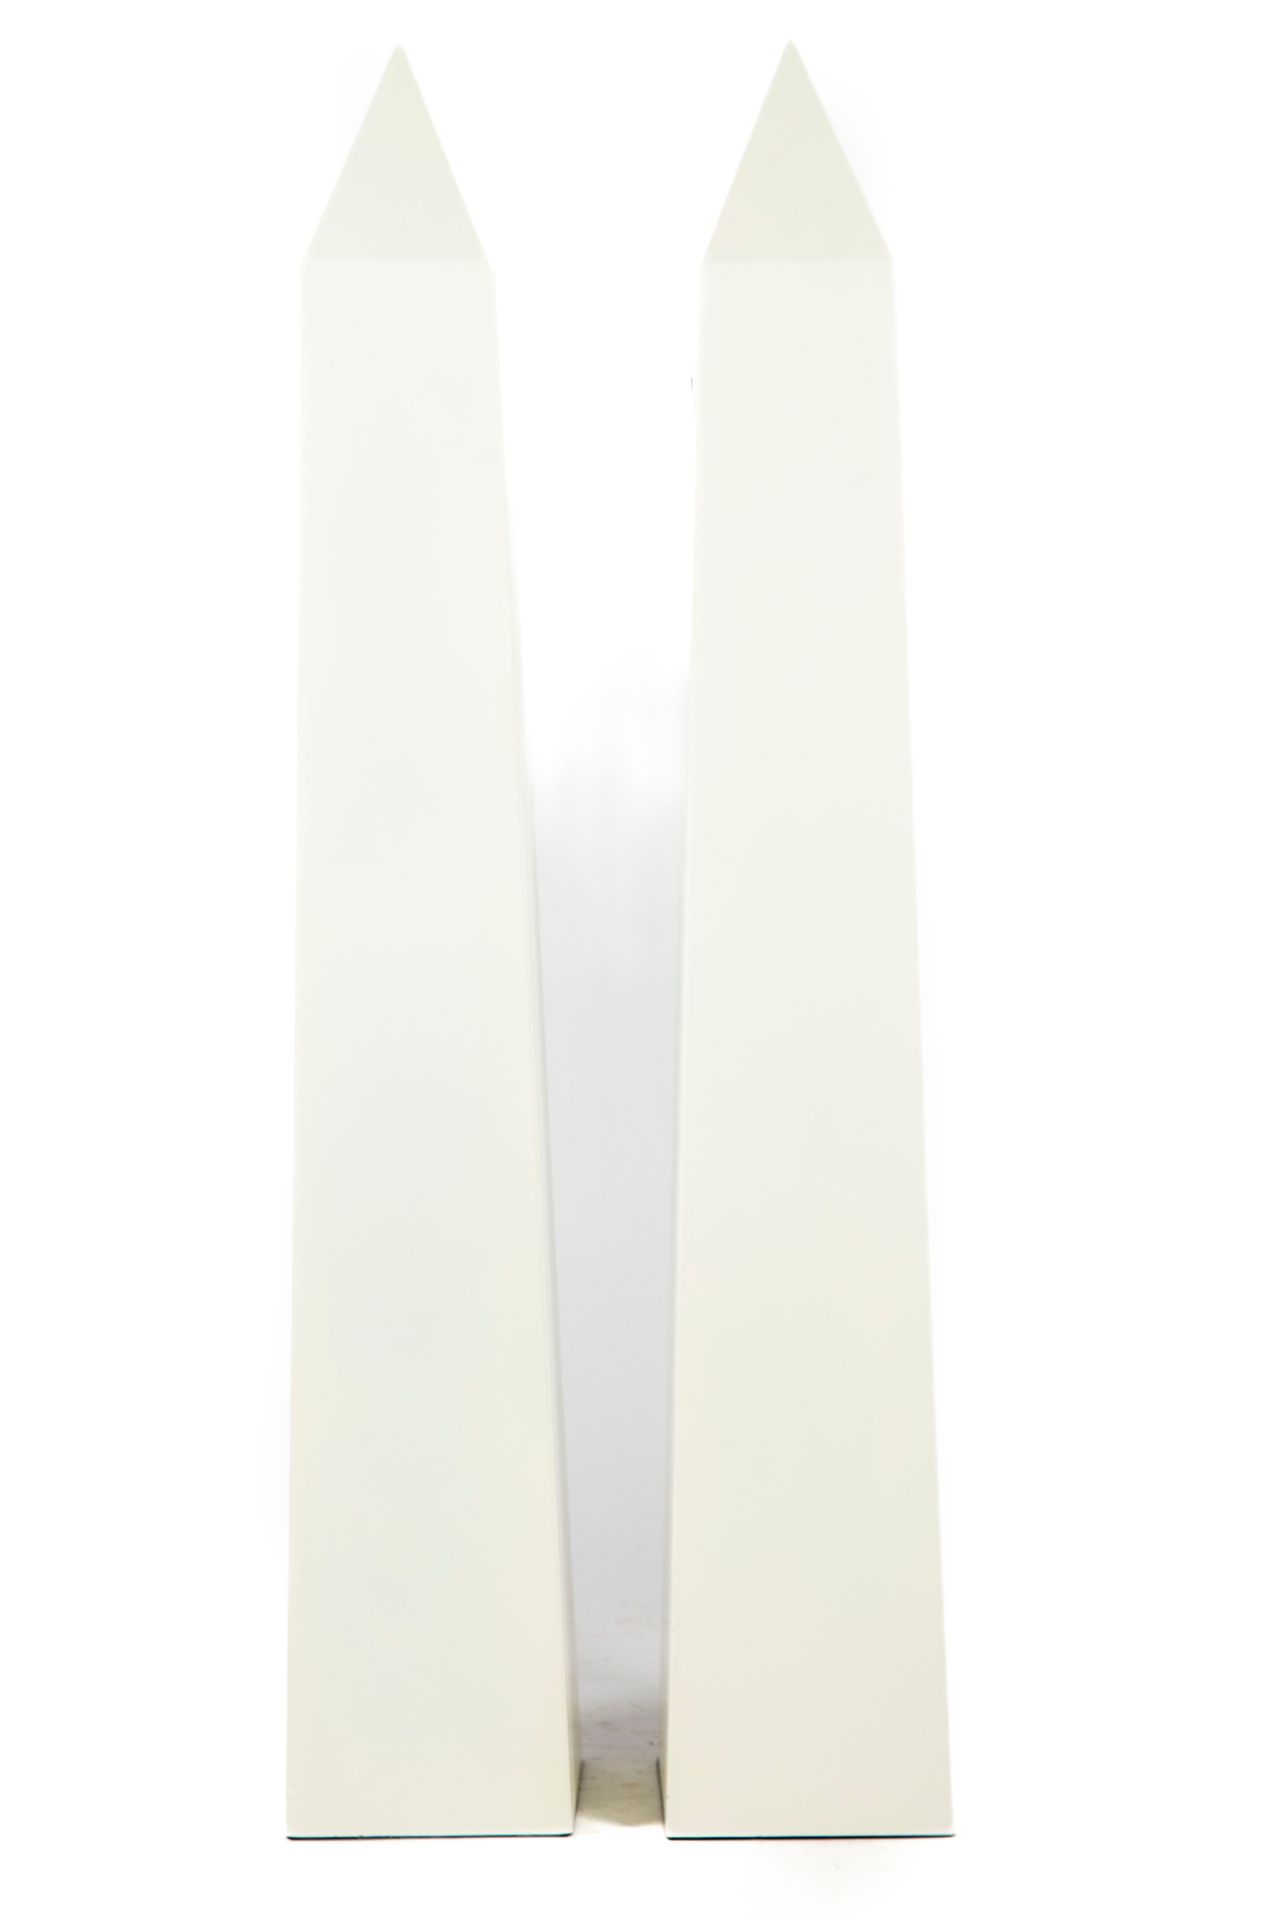 Null Grande coppia di obelischi in resina bianca
H. 95 cm